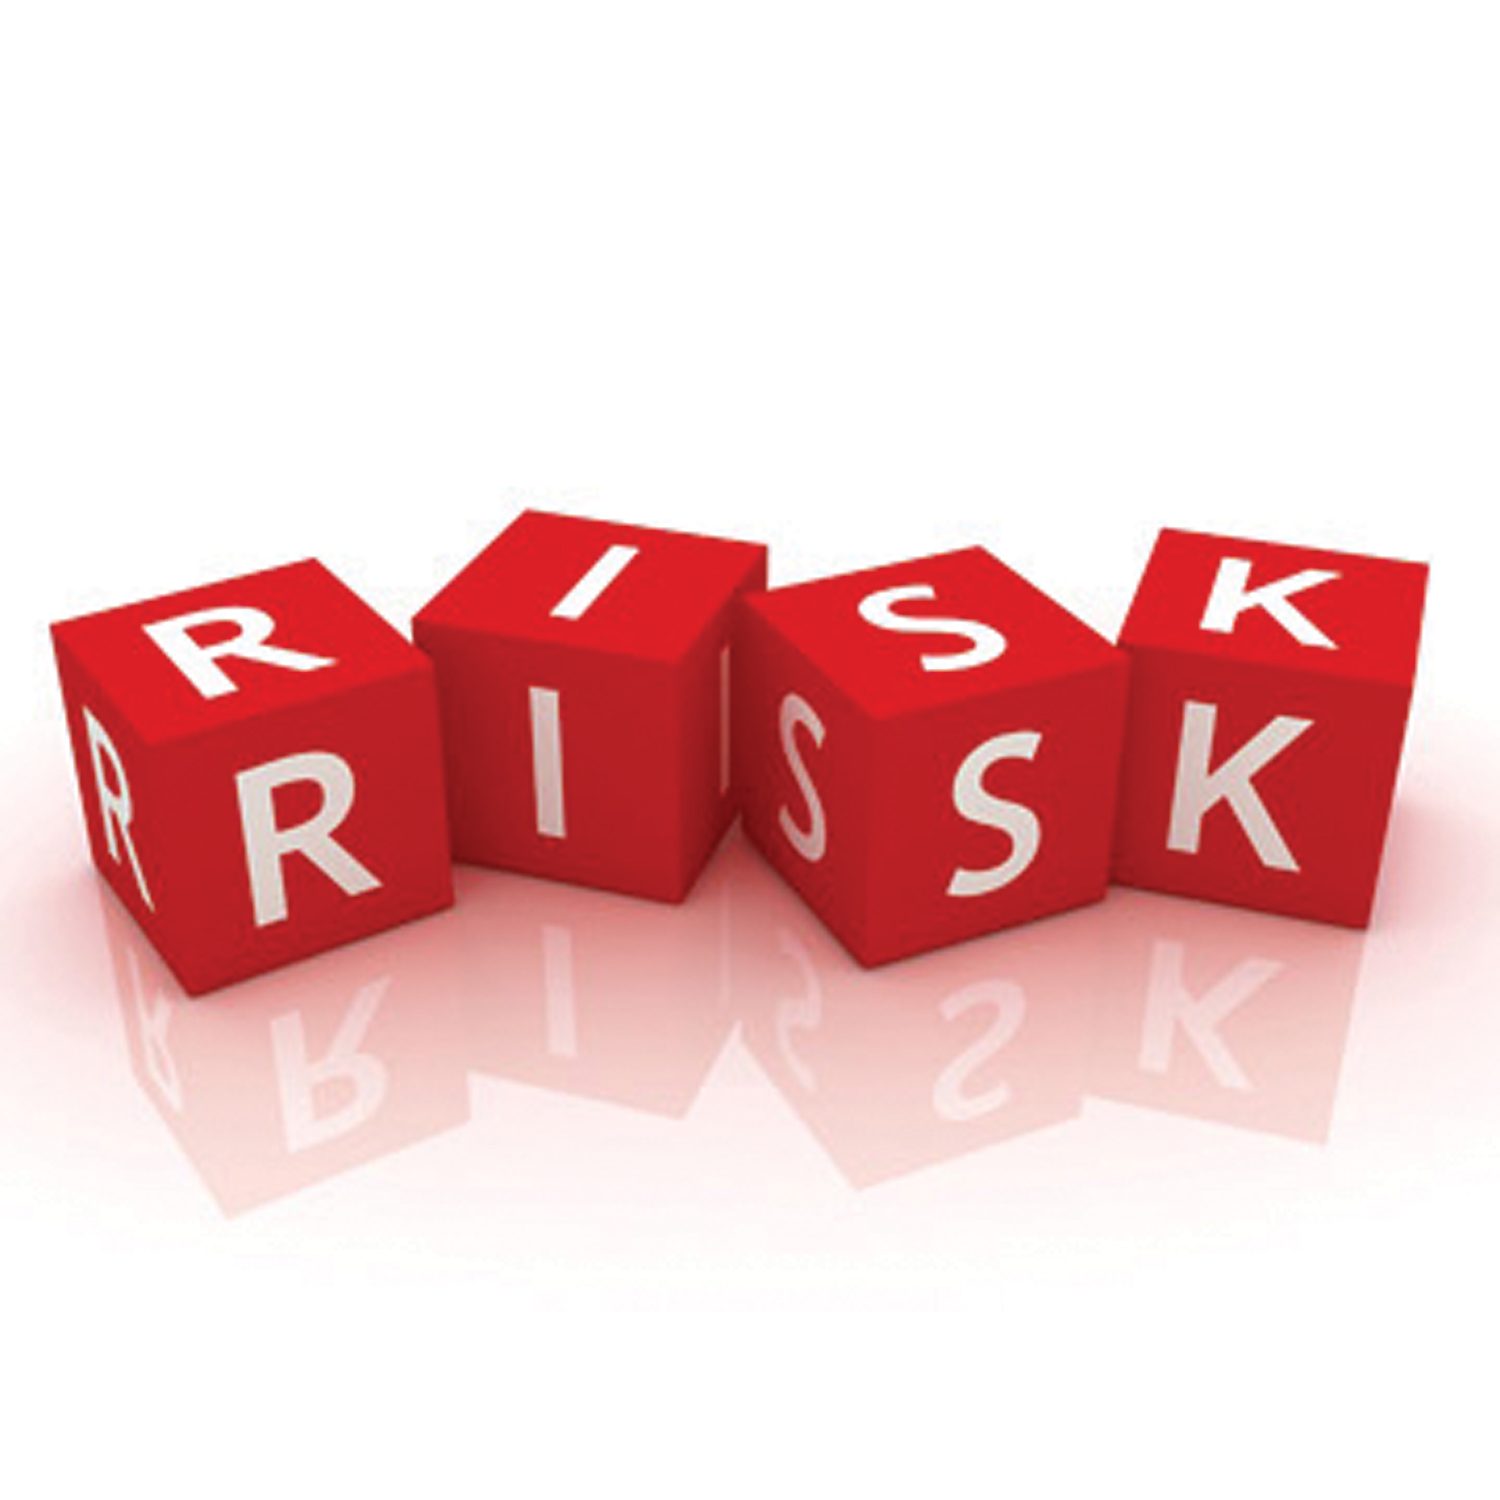 managing-risk